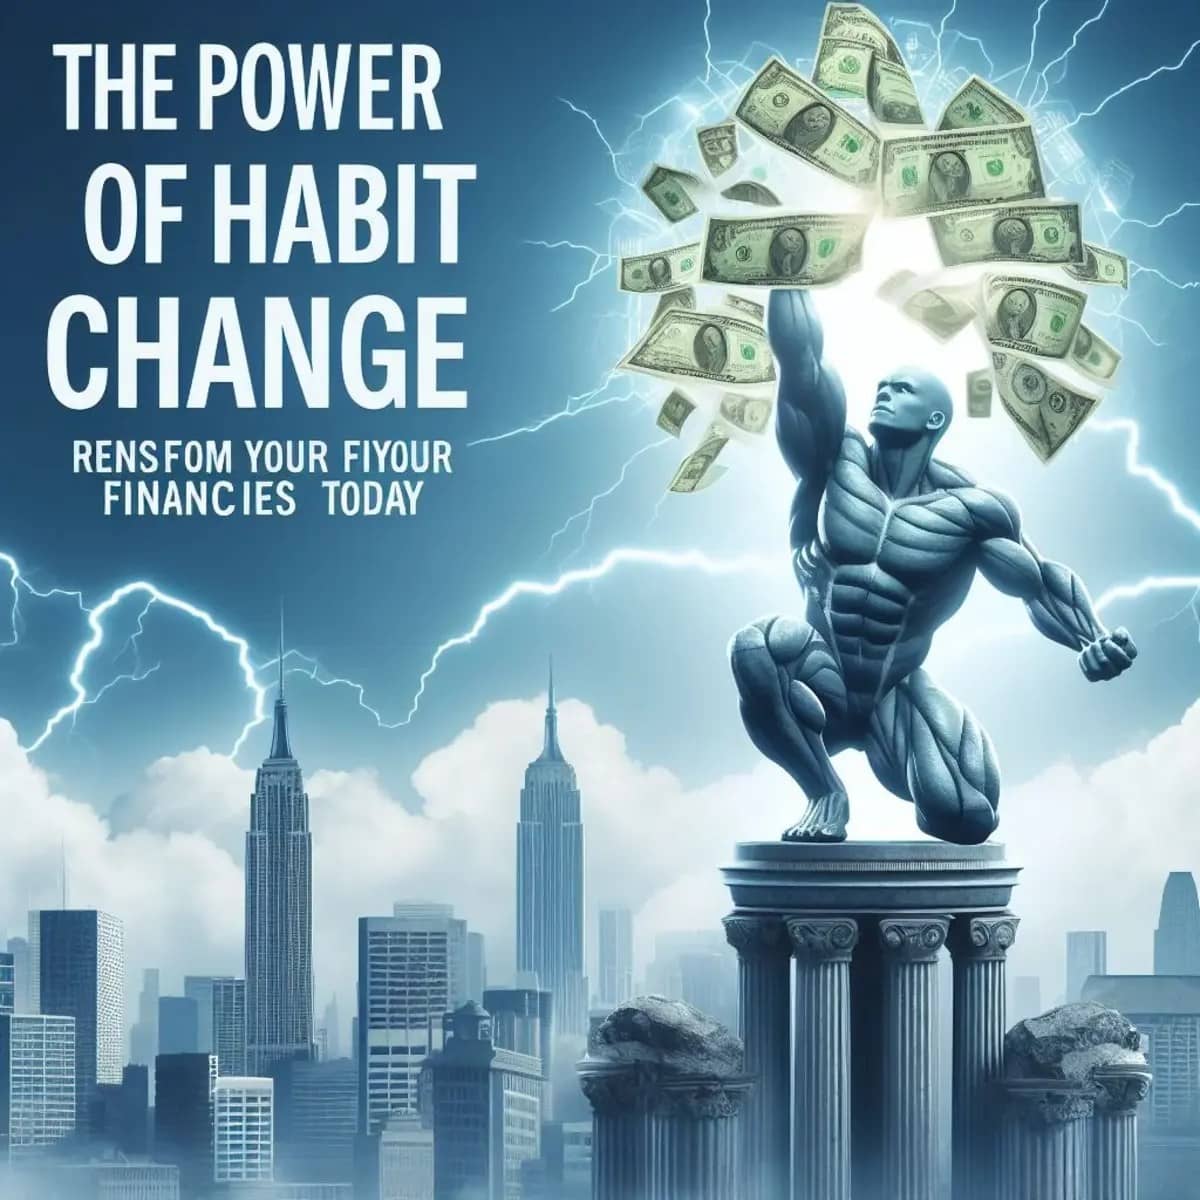 The Power of Habit Change